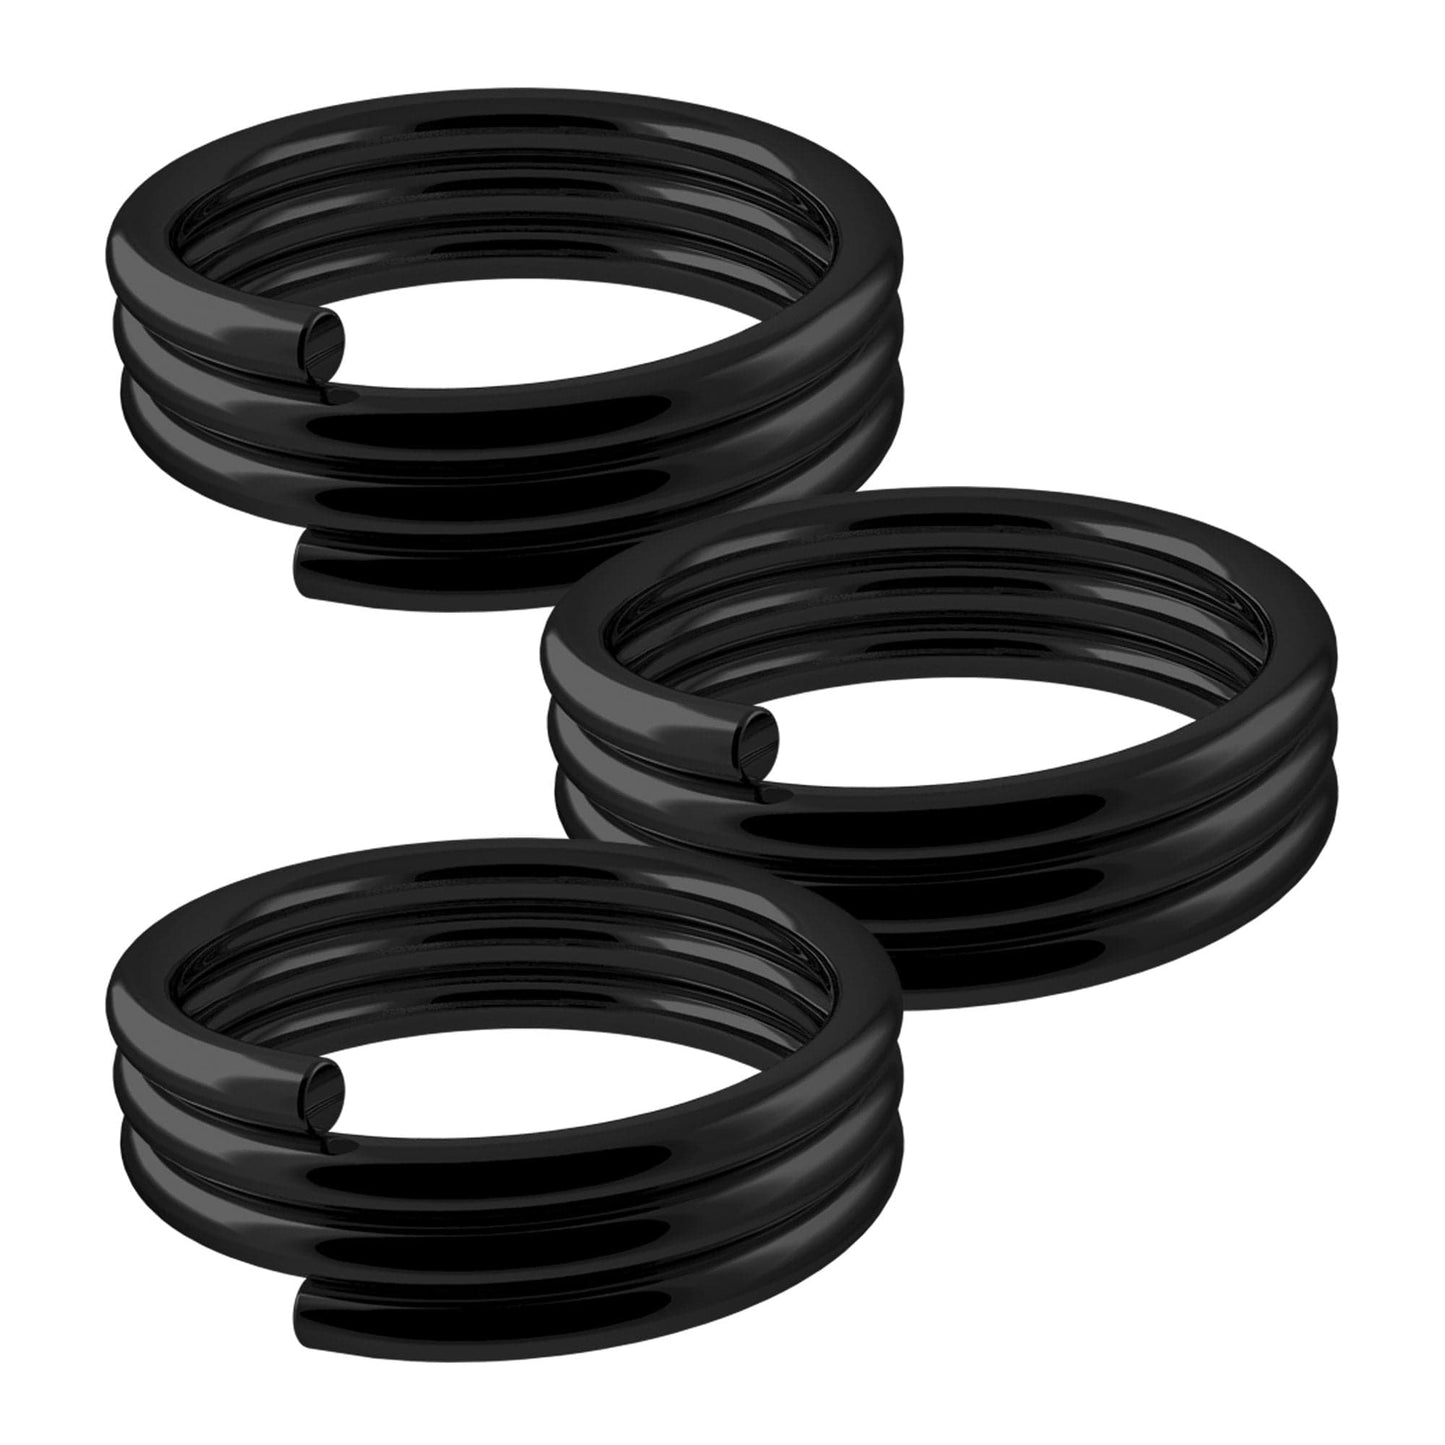 Designa Springs - for use with Nylon Shafts - 10 Sets (30) Black